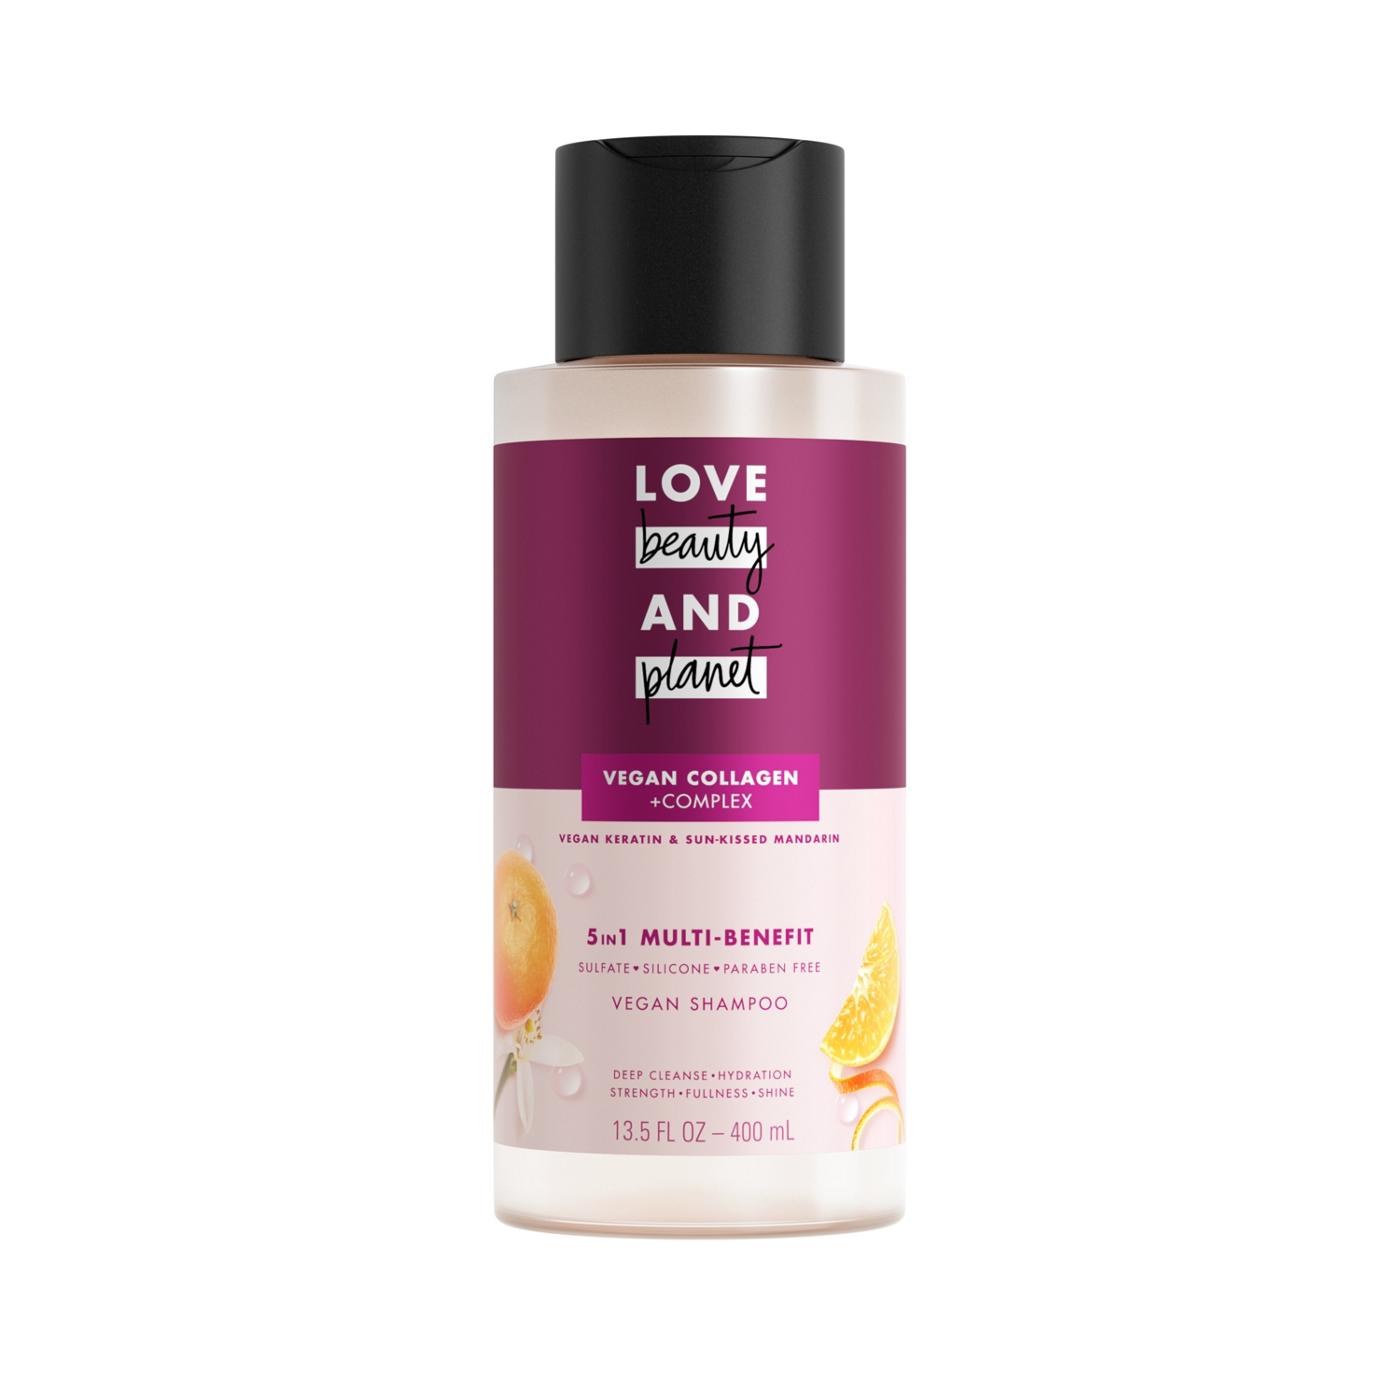 Love Beauty and Planet Vegan Biotin & Sun-Kissed Mandarin Sulfate-Free Shampoo - Shop & Conditioner at